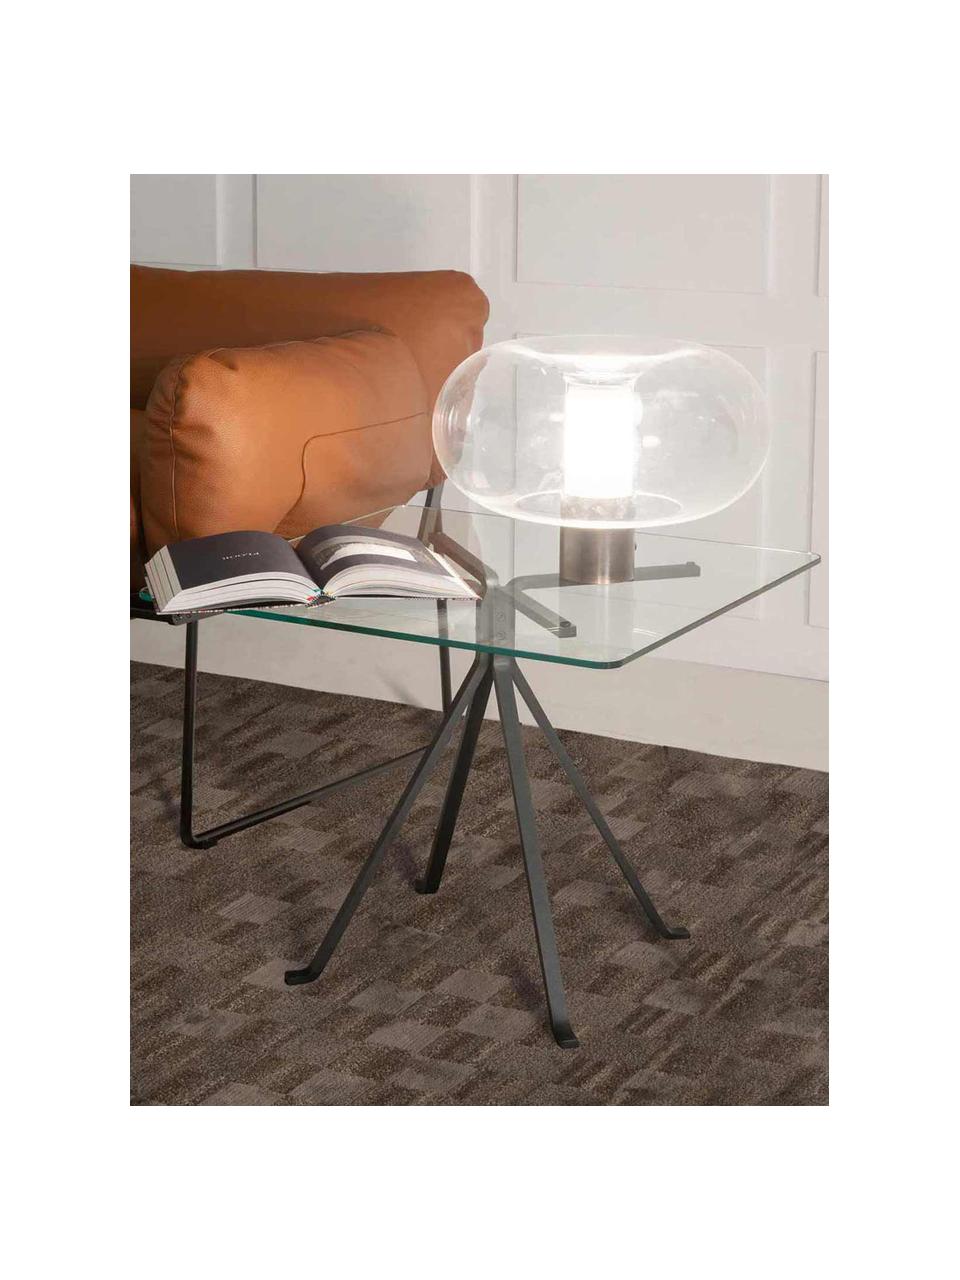 Lámpara de mesa artesanal Fontanella, Pantalla: vidrio, Estructura: metal galvanizado, Cable: transparente, Transparente, plateado, Ø 27 x Al 20 cm